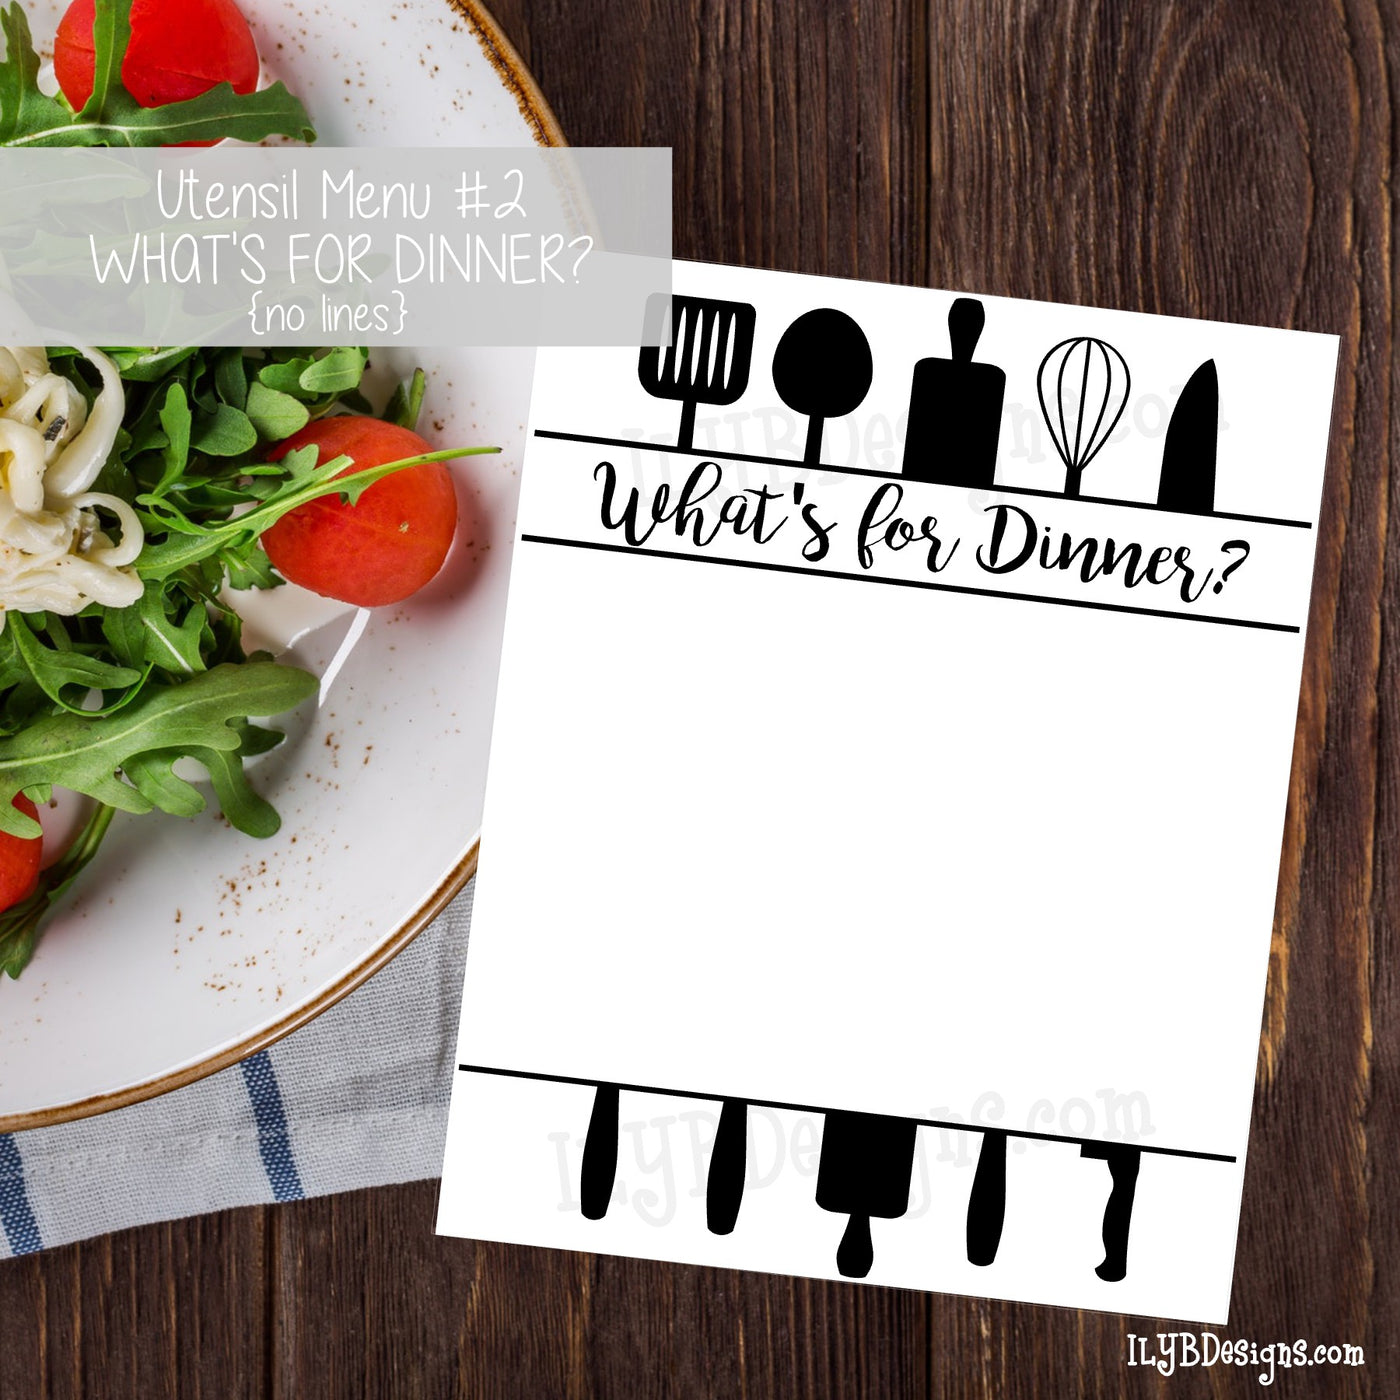 PRINTABLE Utensil Menu #2 - What's for Dinner (no lines) - ILYB Designs